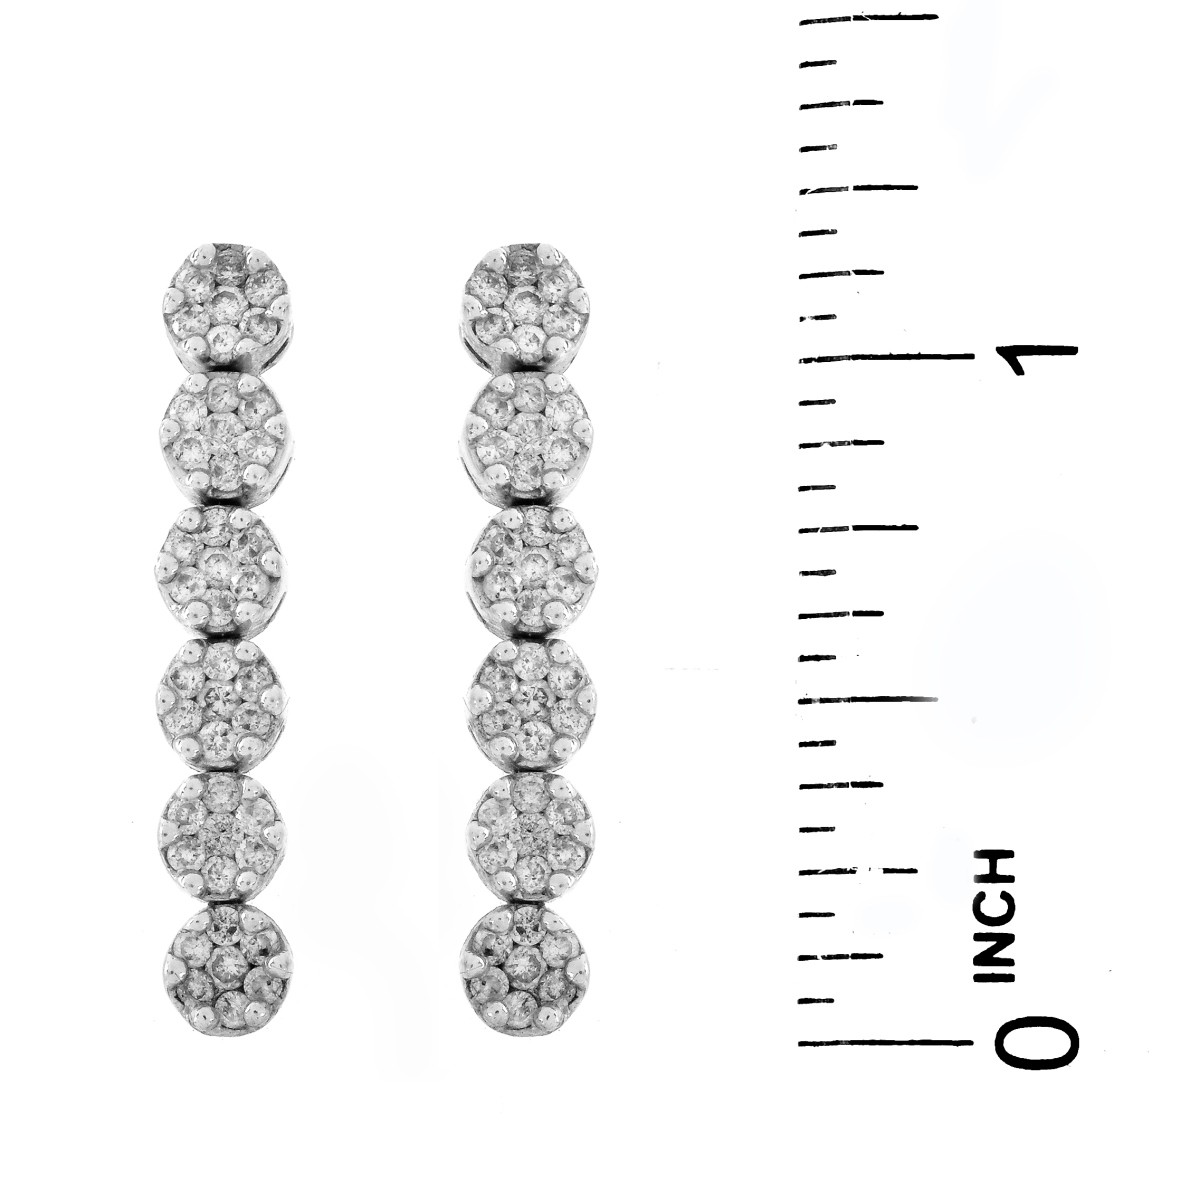 Diamond and 14K Gold Earrings